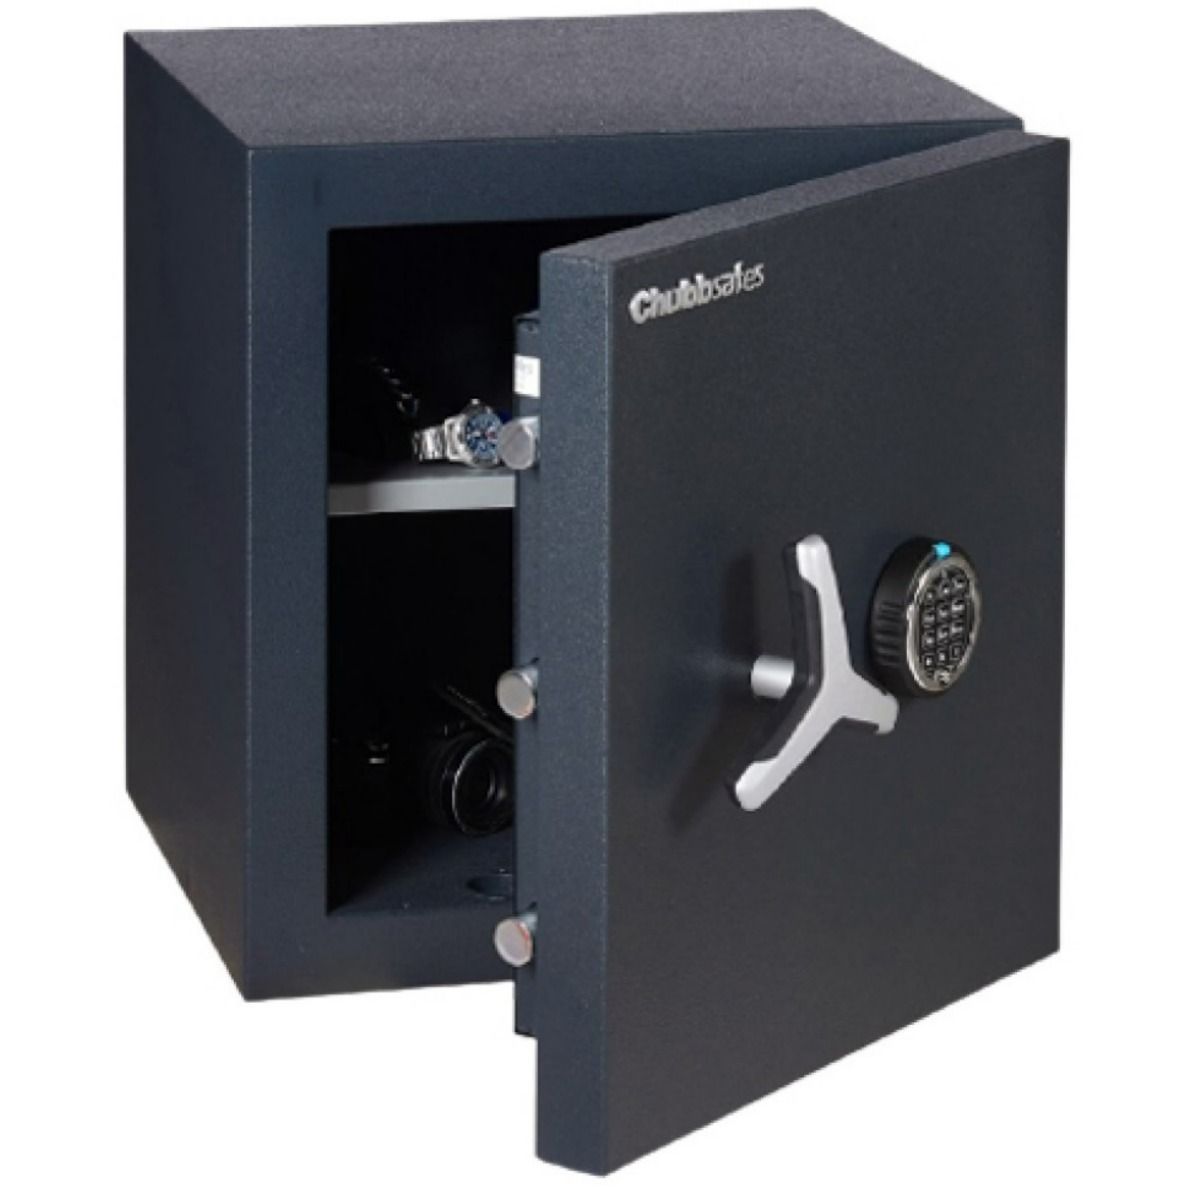 Chubbsafes Duoguard Grade I Model 40 Certified Fire & Burglar Resistant Safe-40L